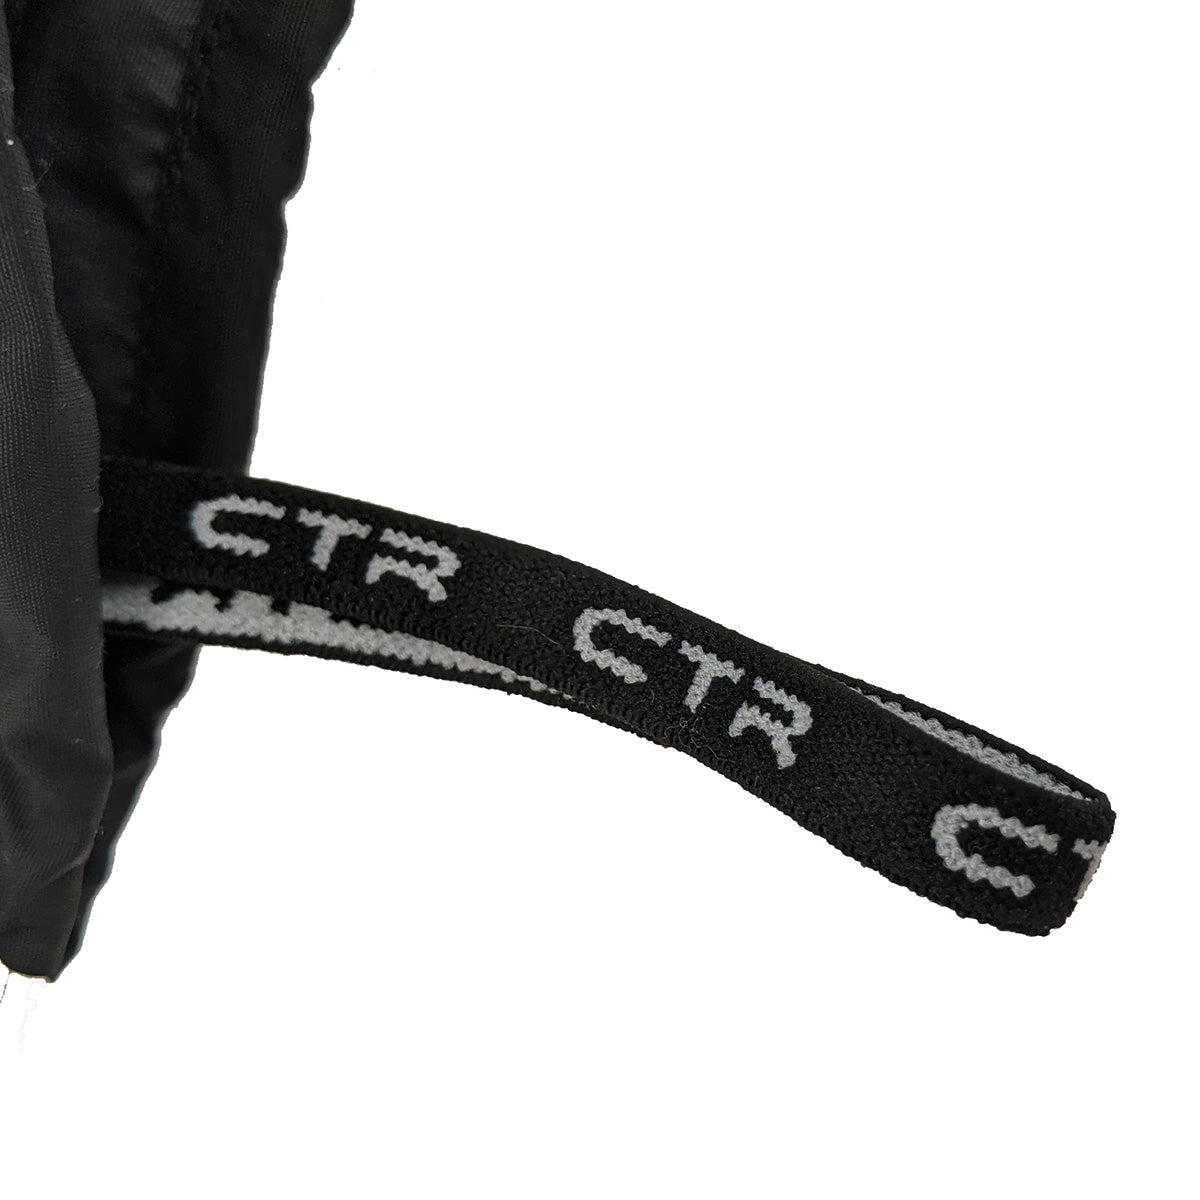 CTR Plus Ski Glove Style:1510